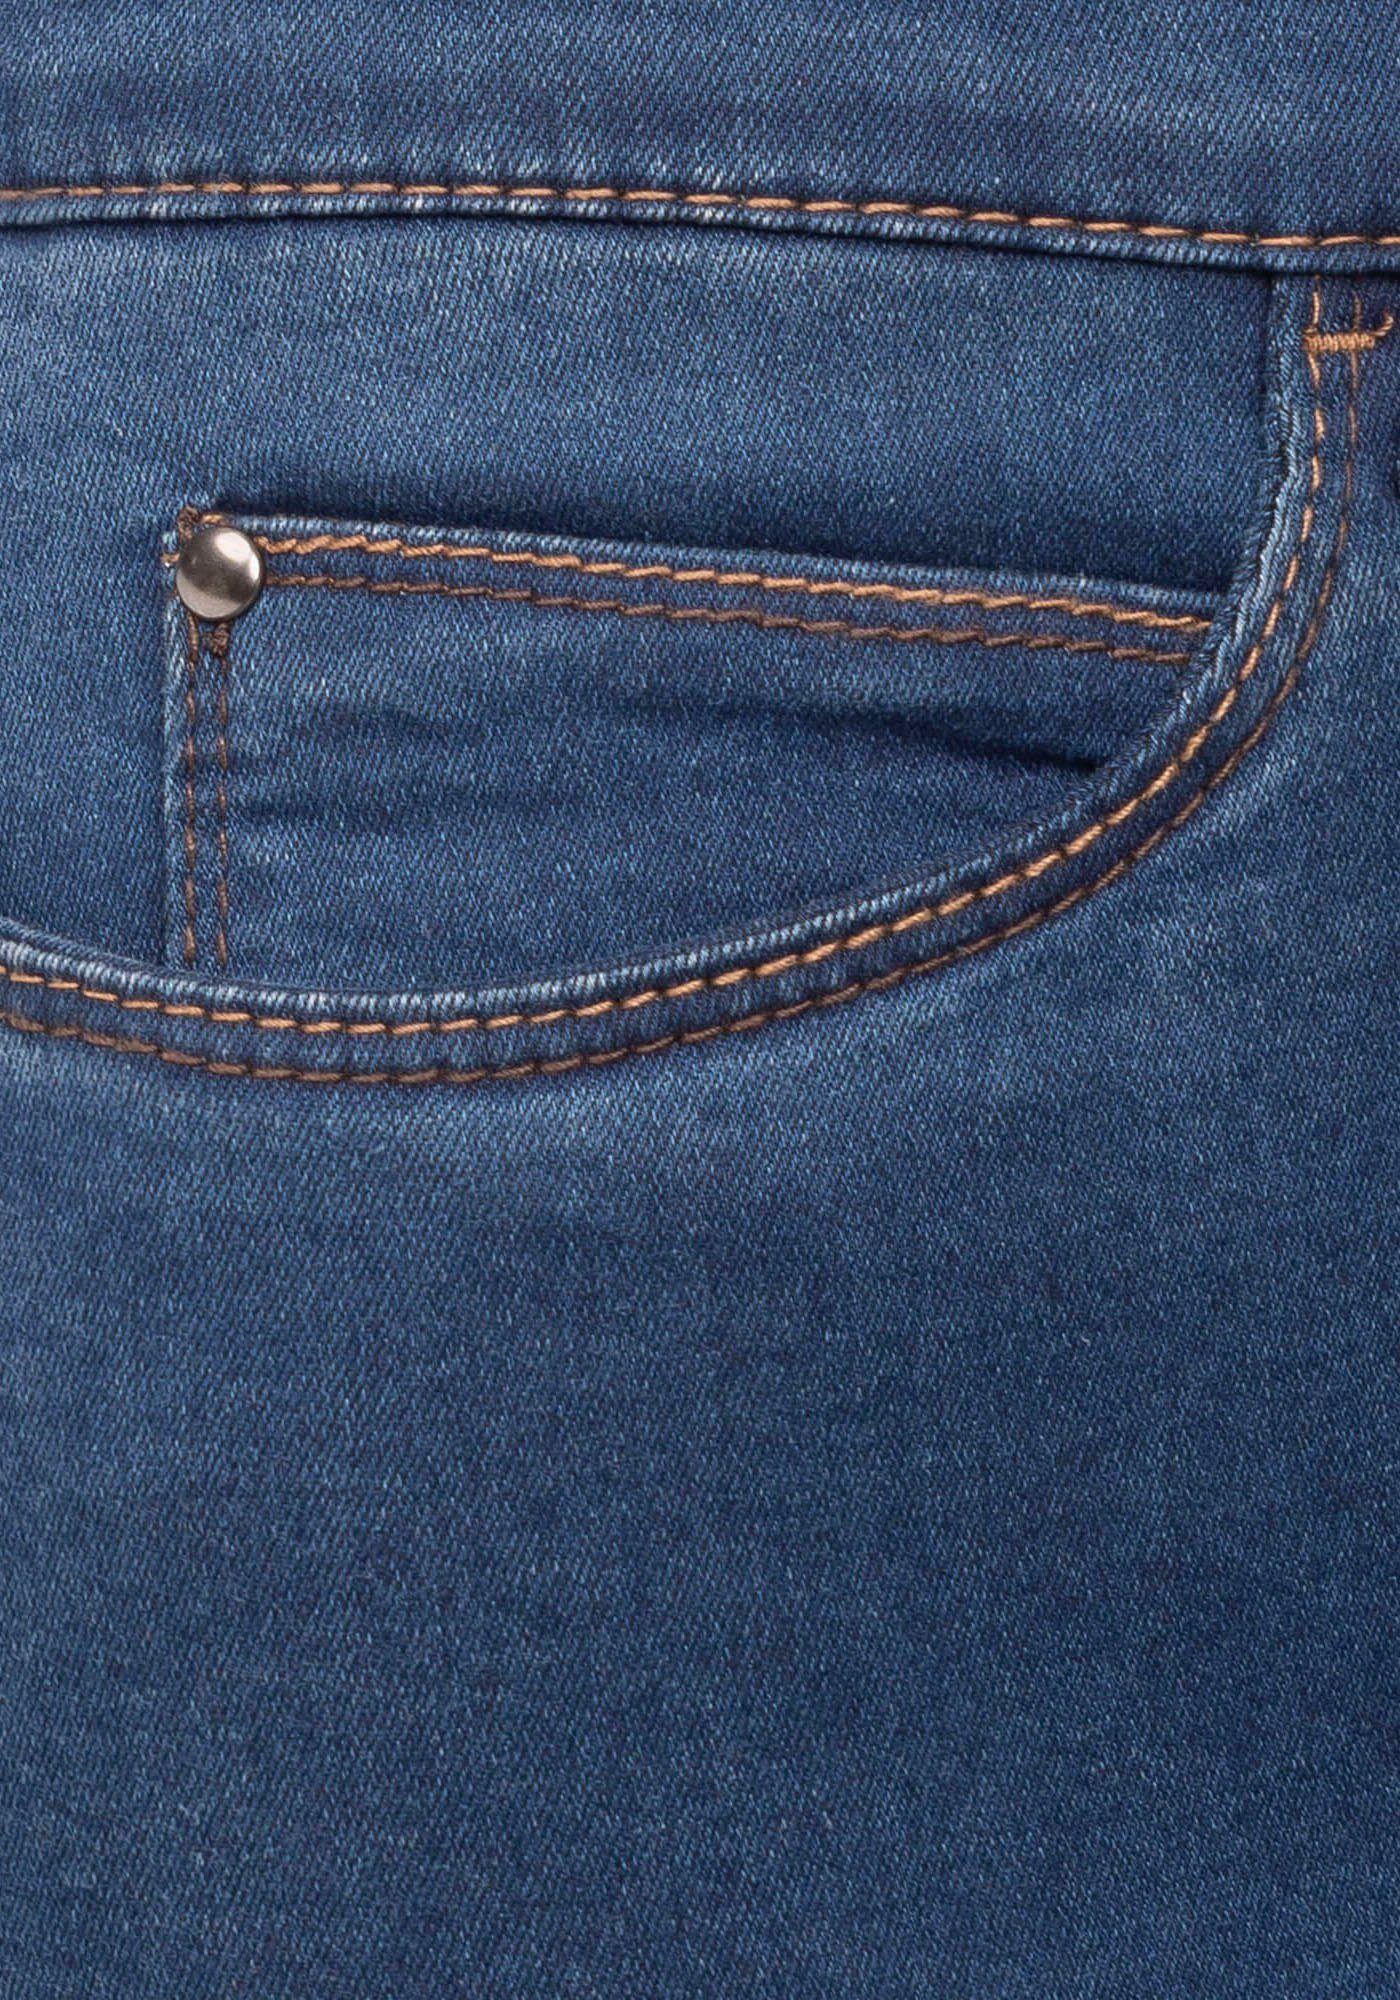 blue gerader Classic-Slim wonderjeans washed stone Schnitt Slim-fit-Jeans Klassischer